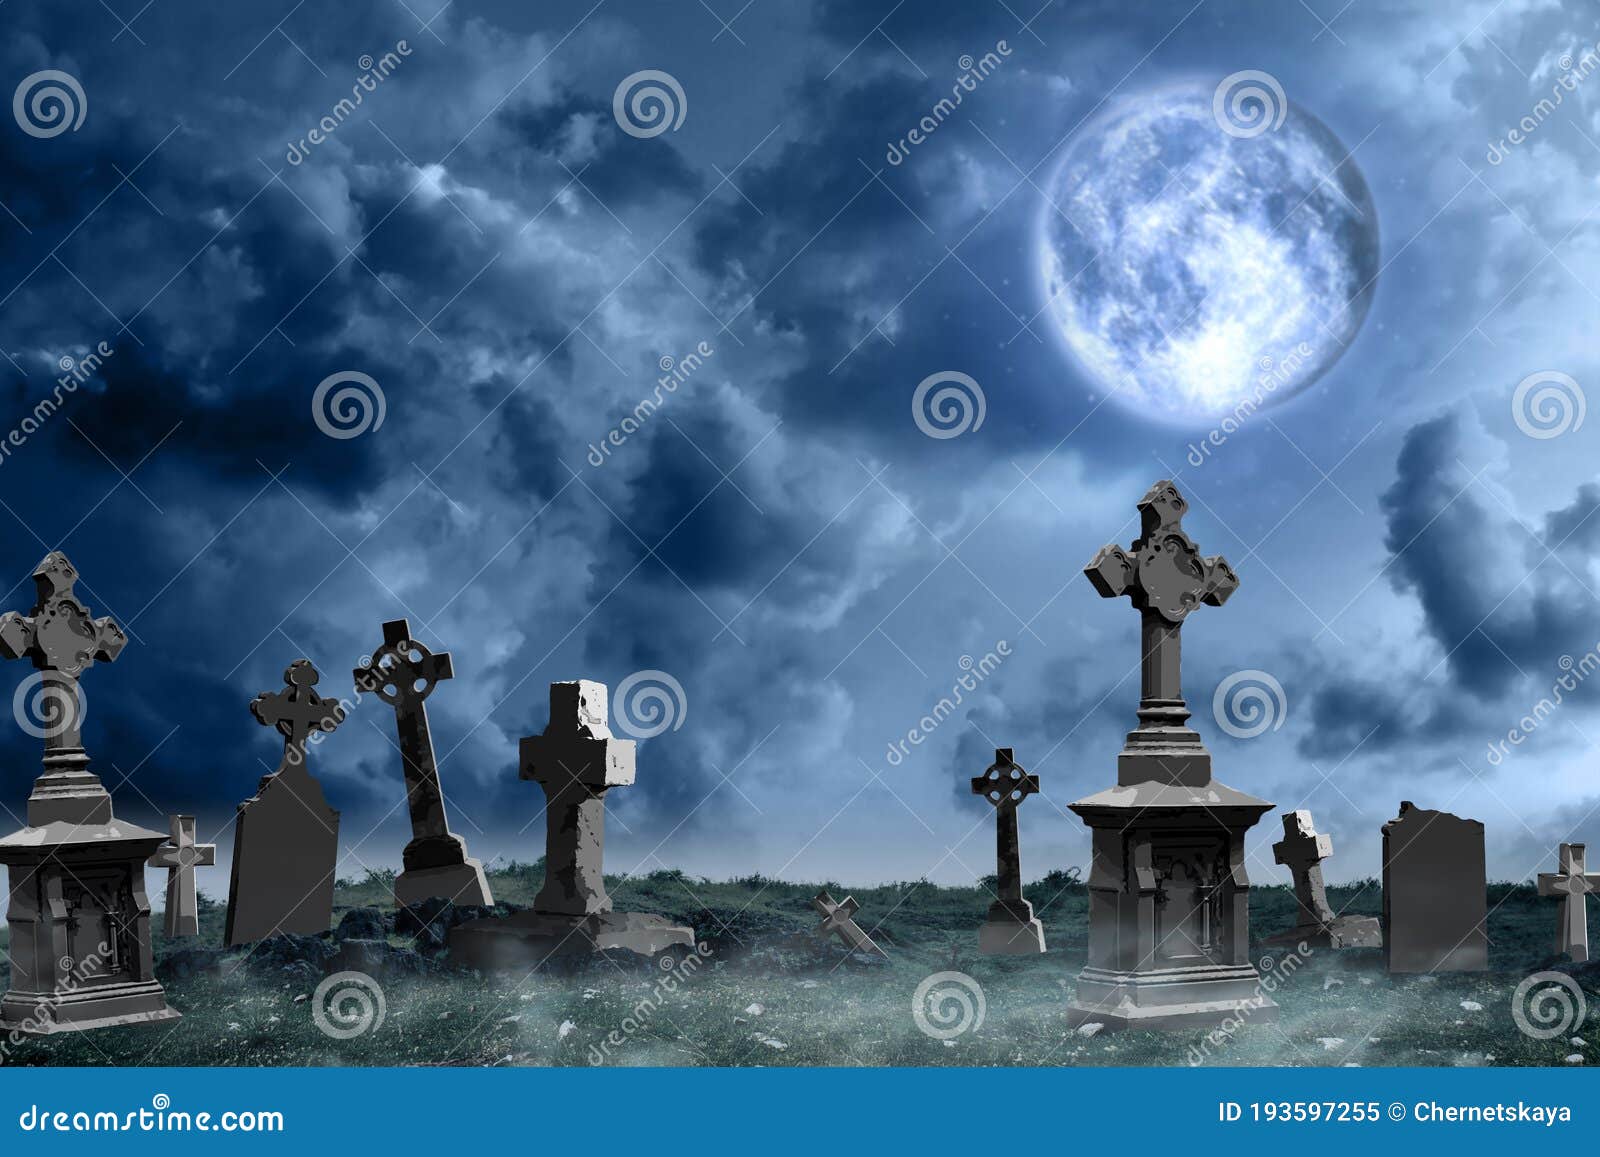 misty graveyard with old creepy headstones under moon on halloween